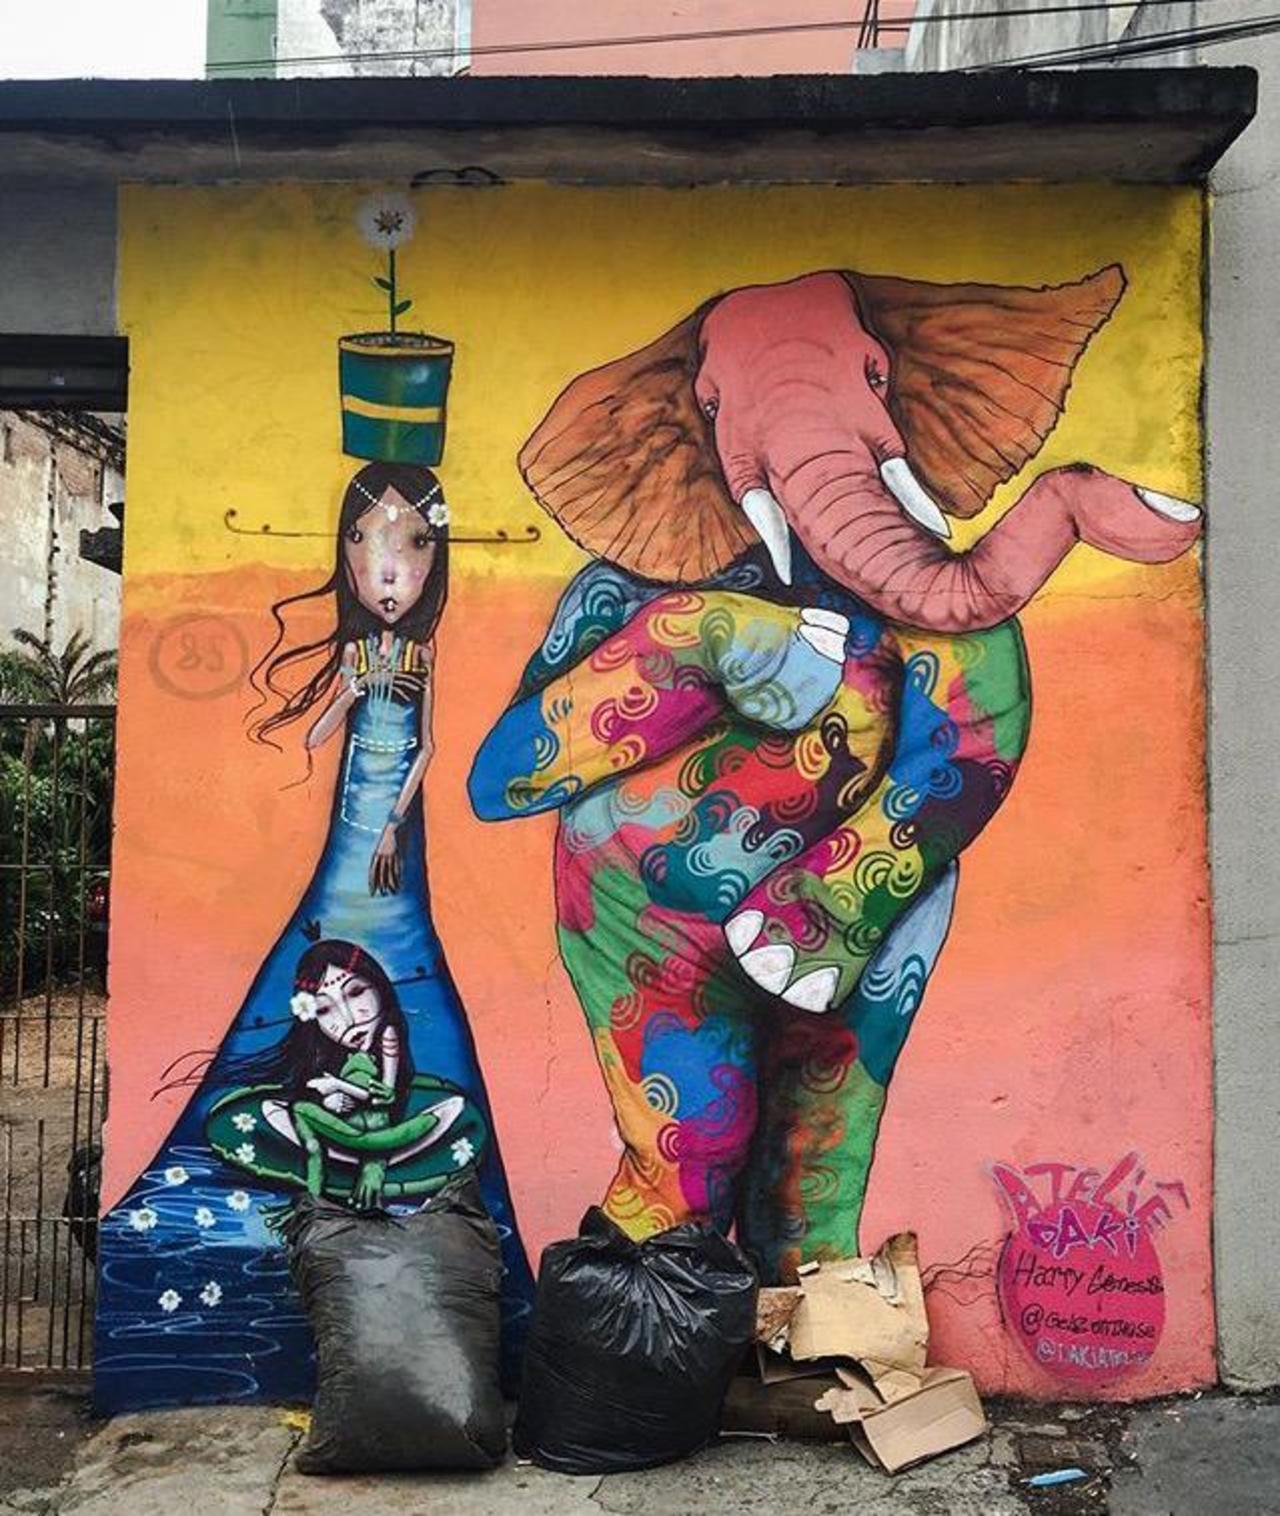 Street Art by Harry Geneis & Gelson in São Paulo #art #mural #graffiti #streetart http://t.co/SlLbhuMZfD … … …… … http://twitter.com/GoogleStreetArt/status/648016473831645184/photo/1/large?utm_source=fb&utm_medium=fb&utm_campaign=charlesjackso14&utm_content=648021464147460096